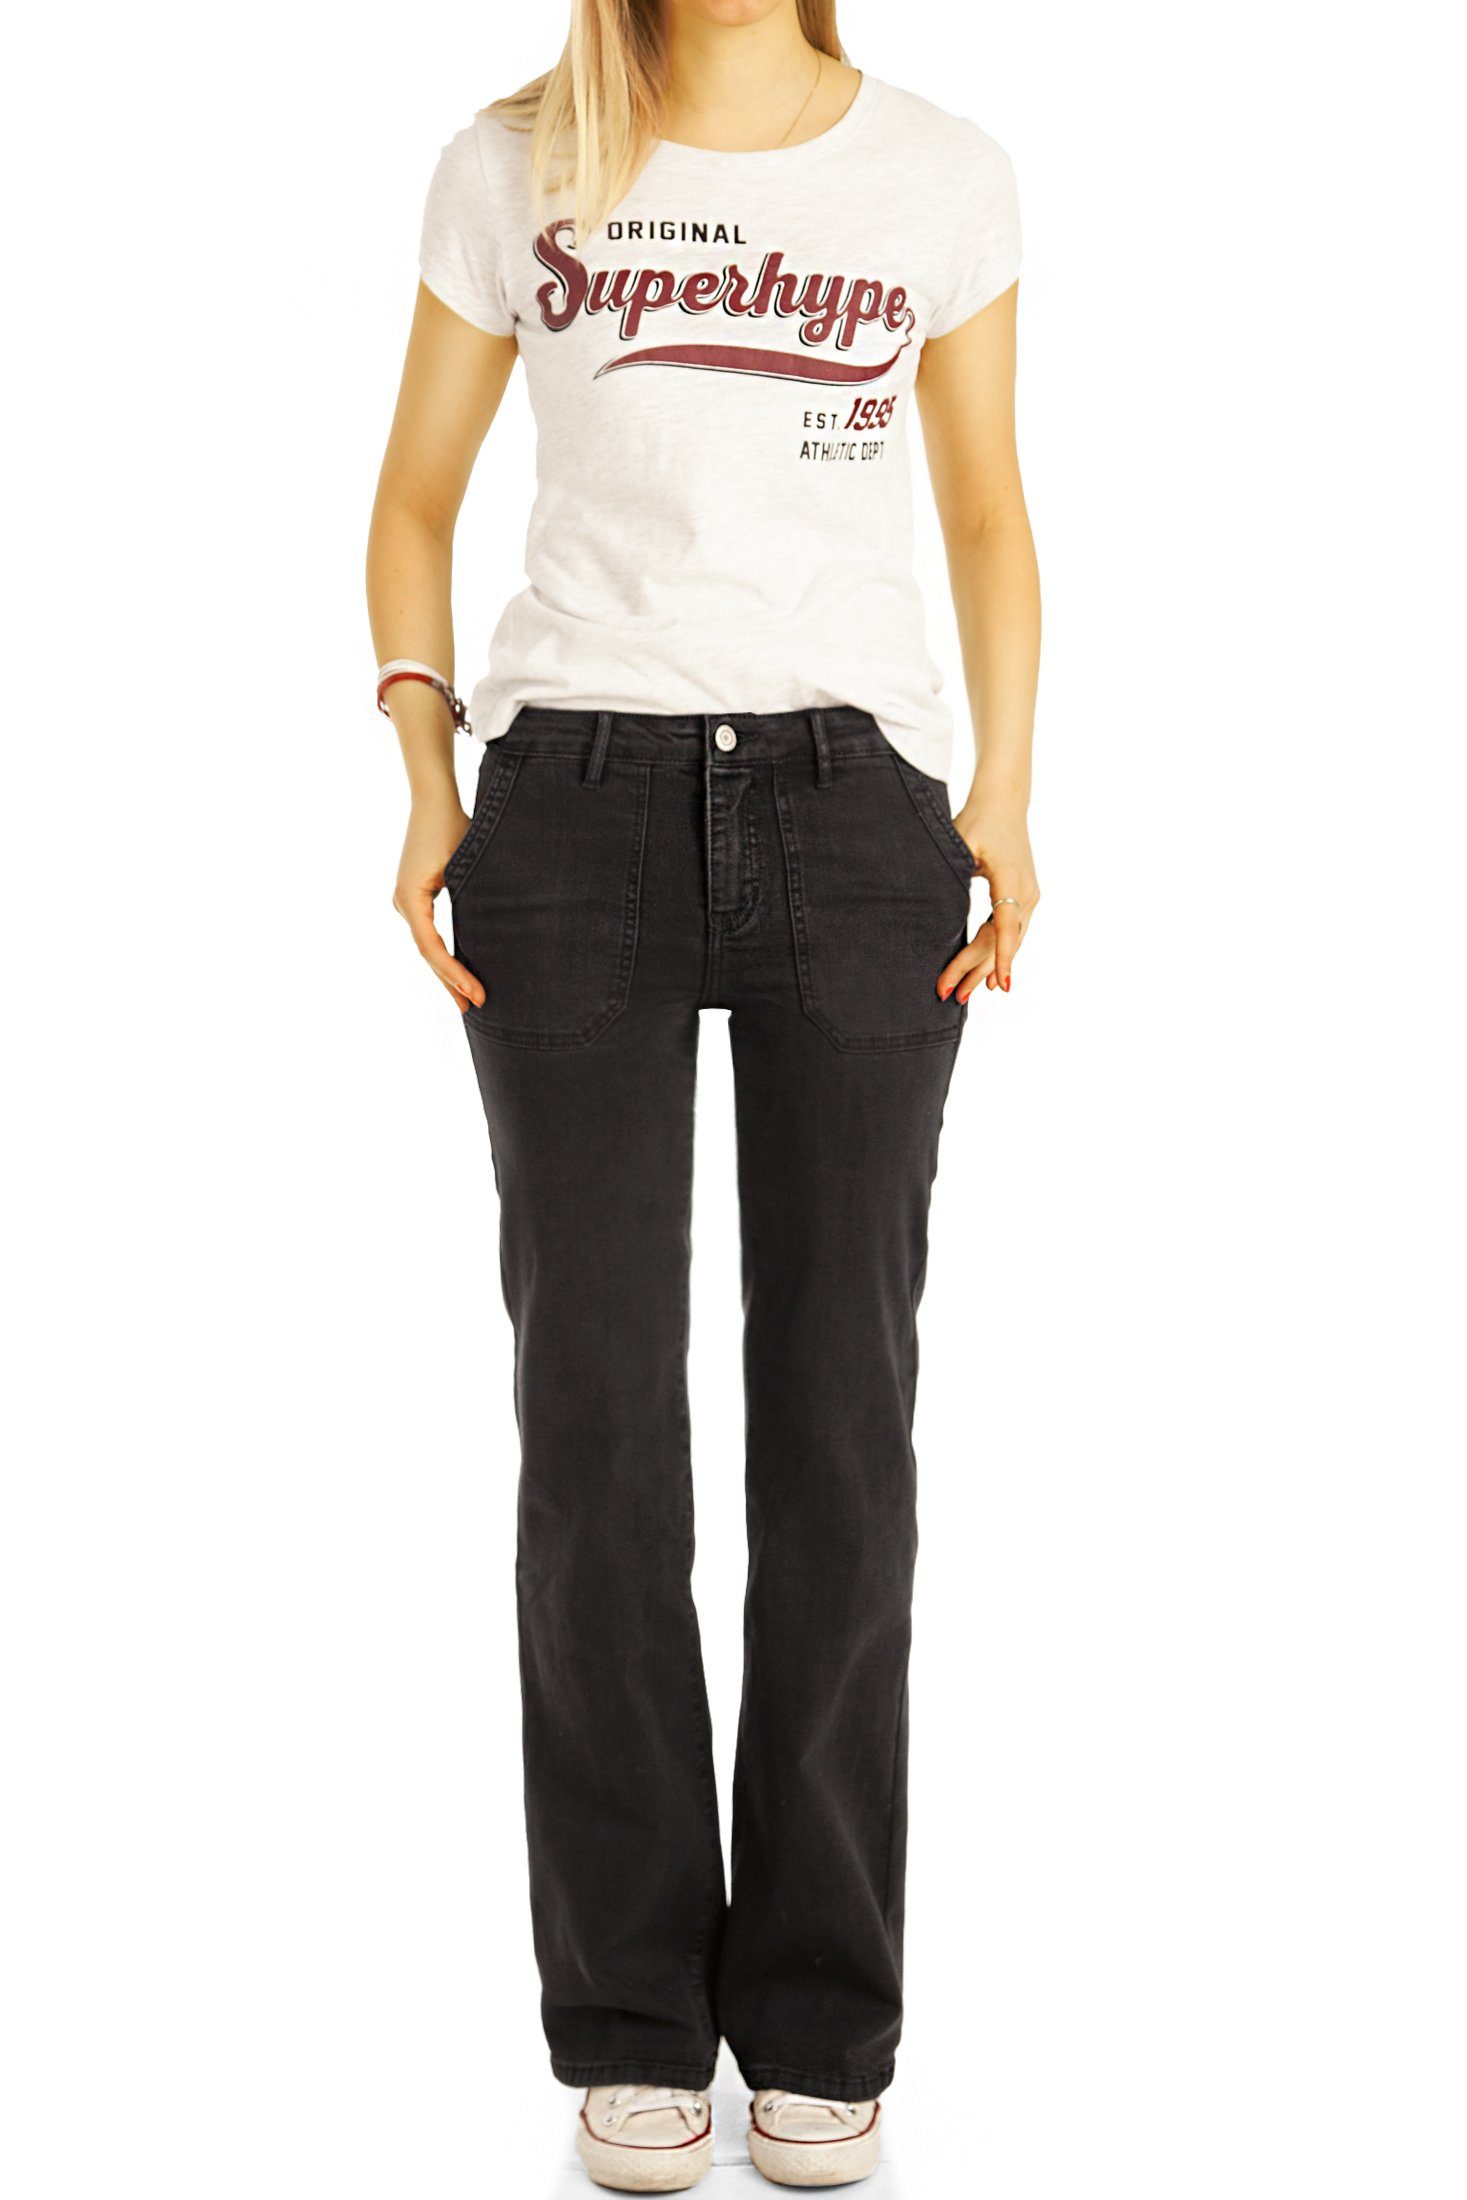 mit Bootcut-Jeans Bootcut j31k waist Damen Jeans, medium be 5-Pocket-Style - straight styled Hosen dunkelblau Passform - Stretch-Anteil,